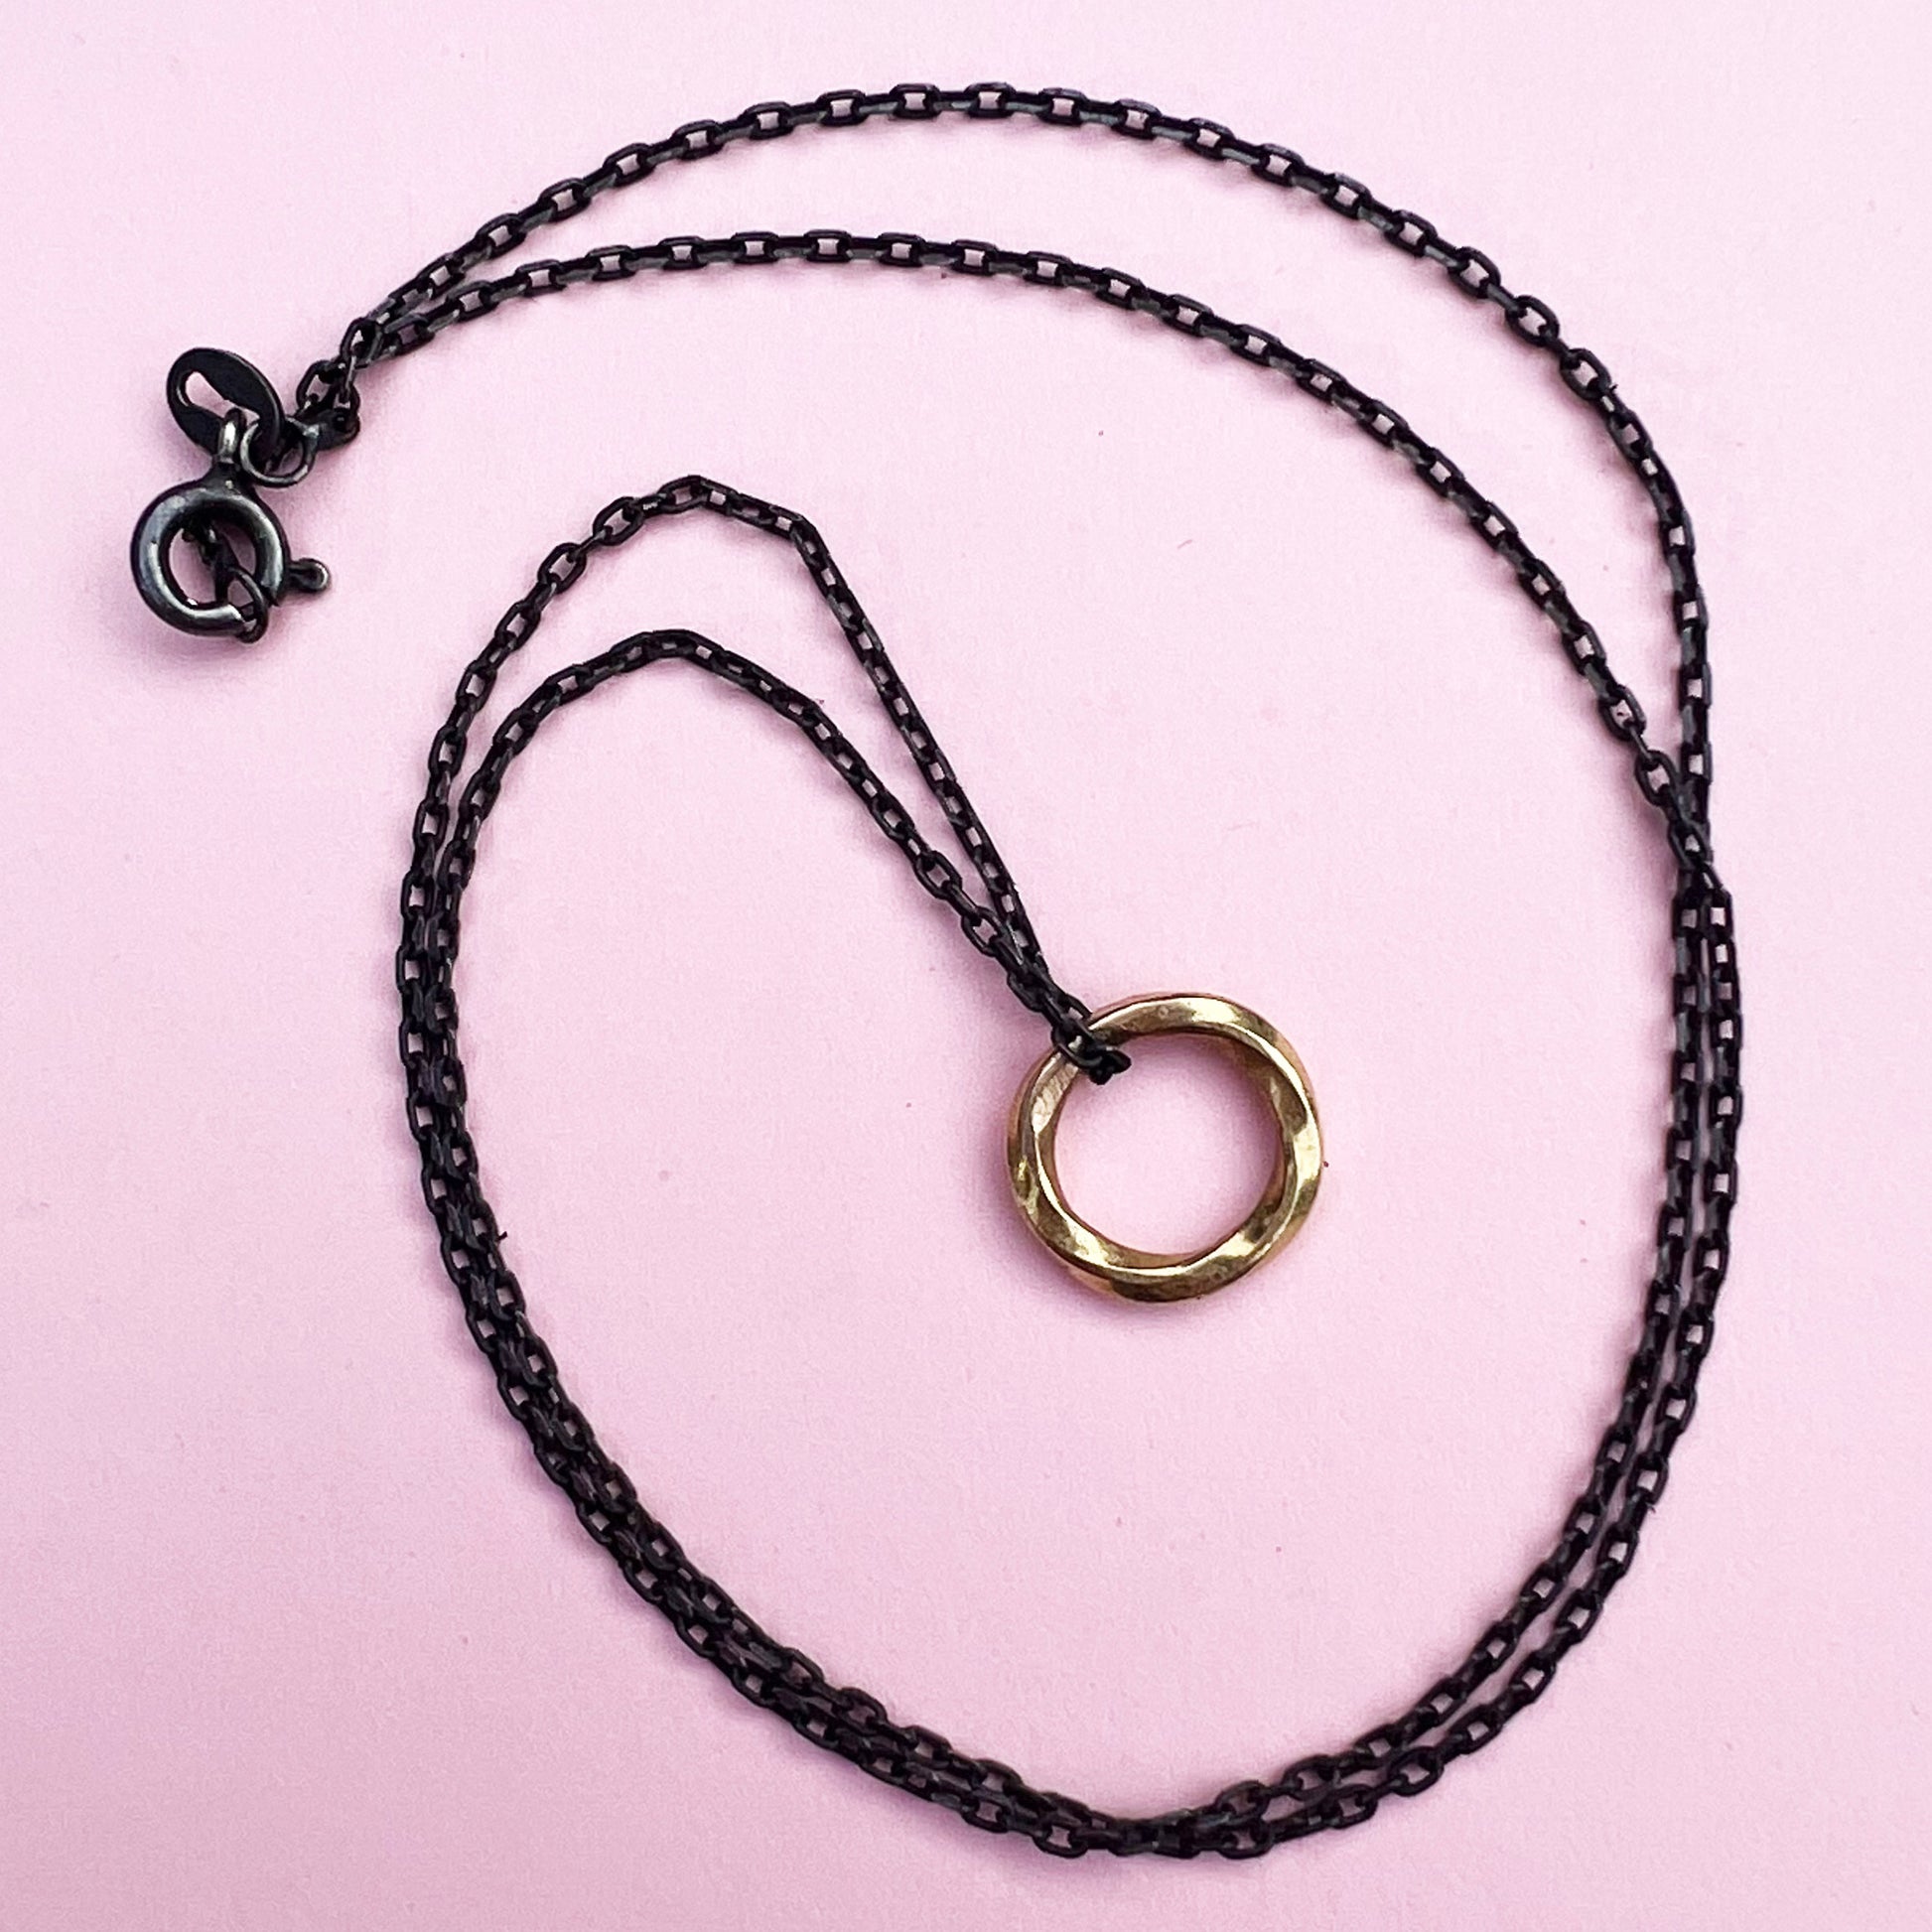 18ct gold flow pendant, black sliver chain, gold flow pendant, black chain, silver necklace, 18ct gold pendant, handmade jewellery, flow pendant, flow necklace